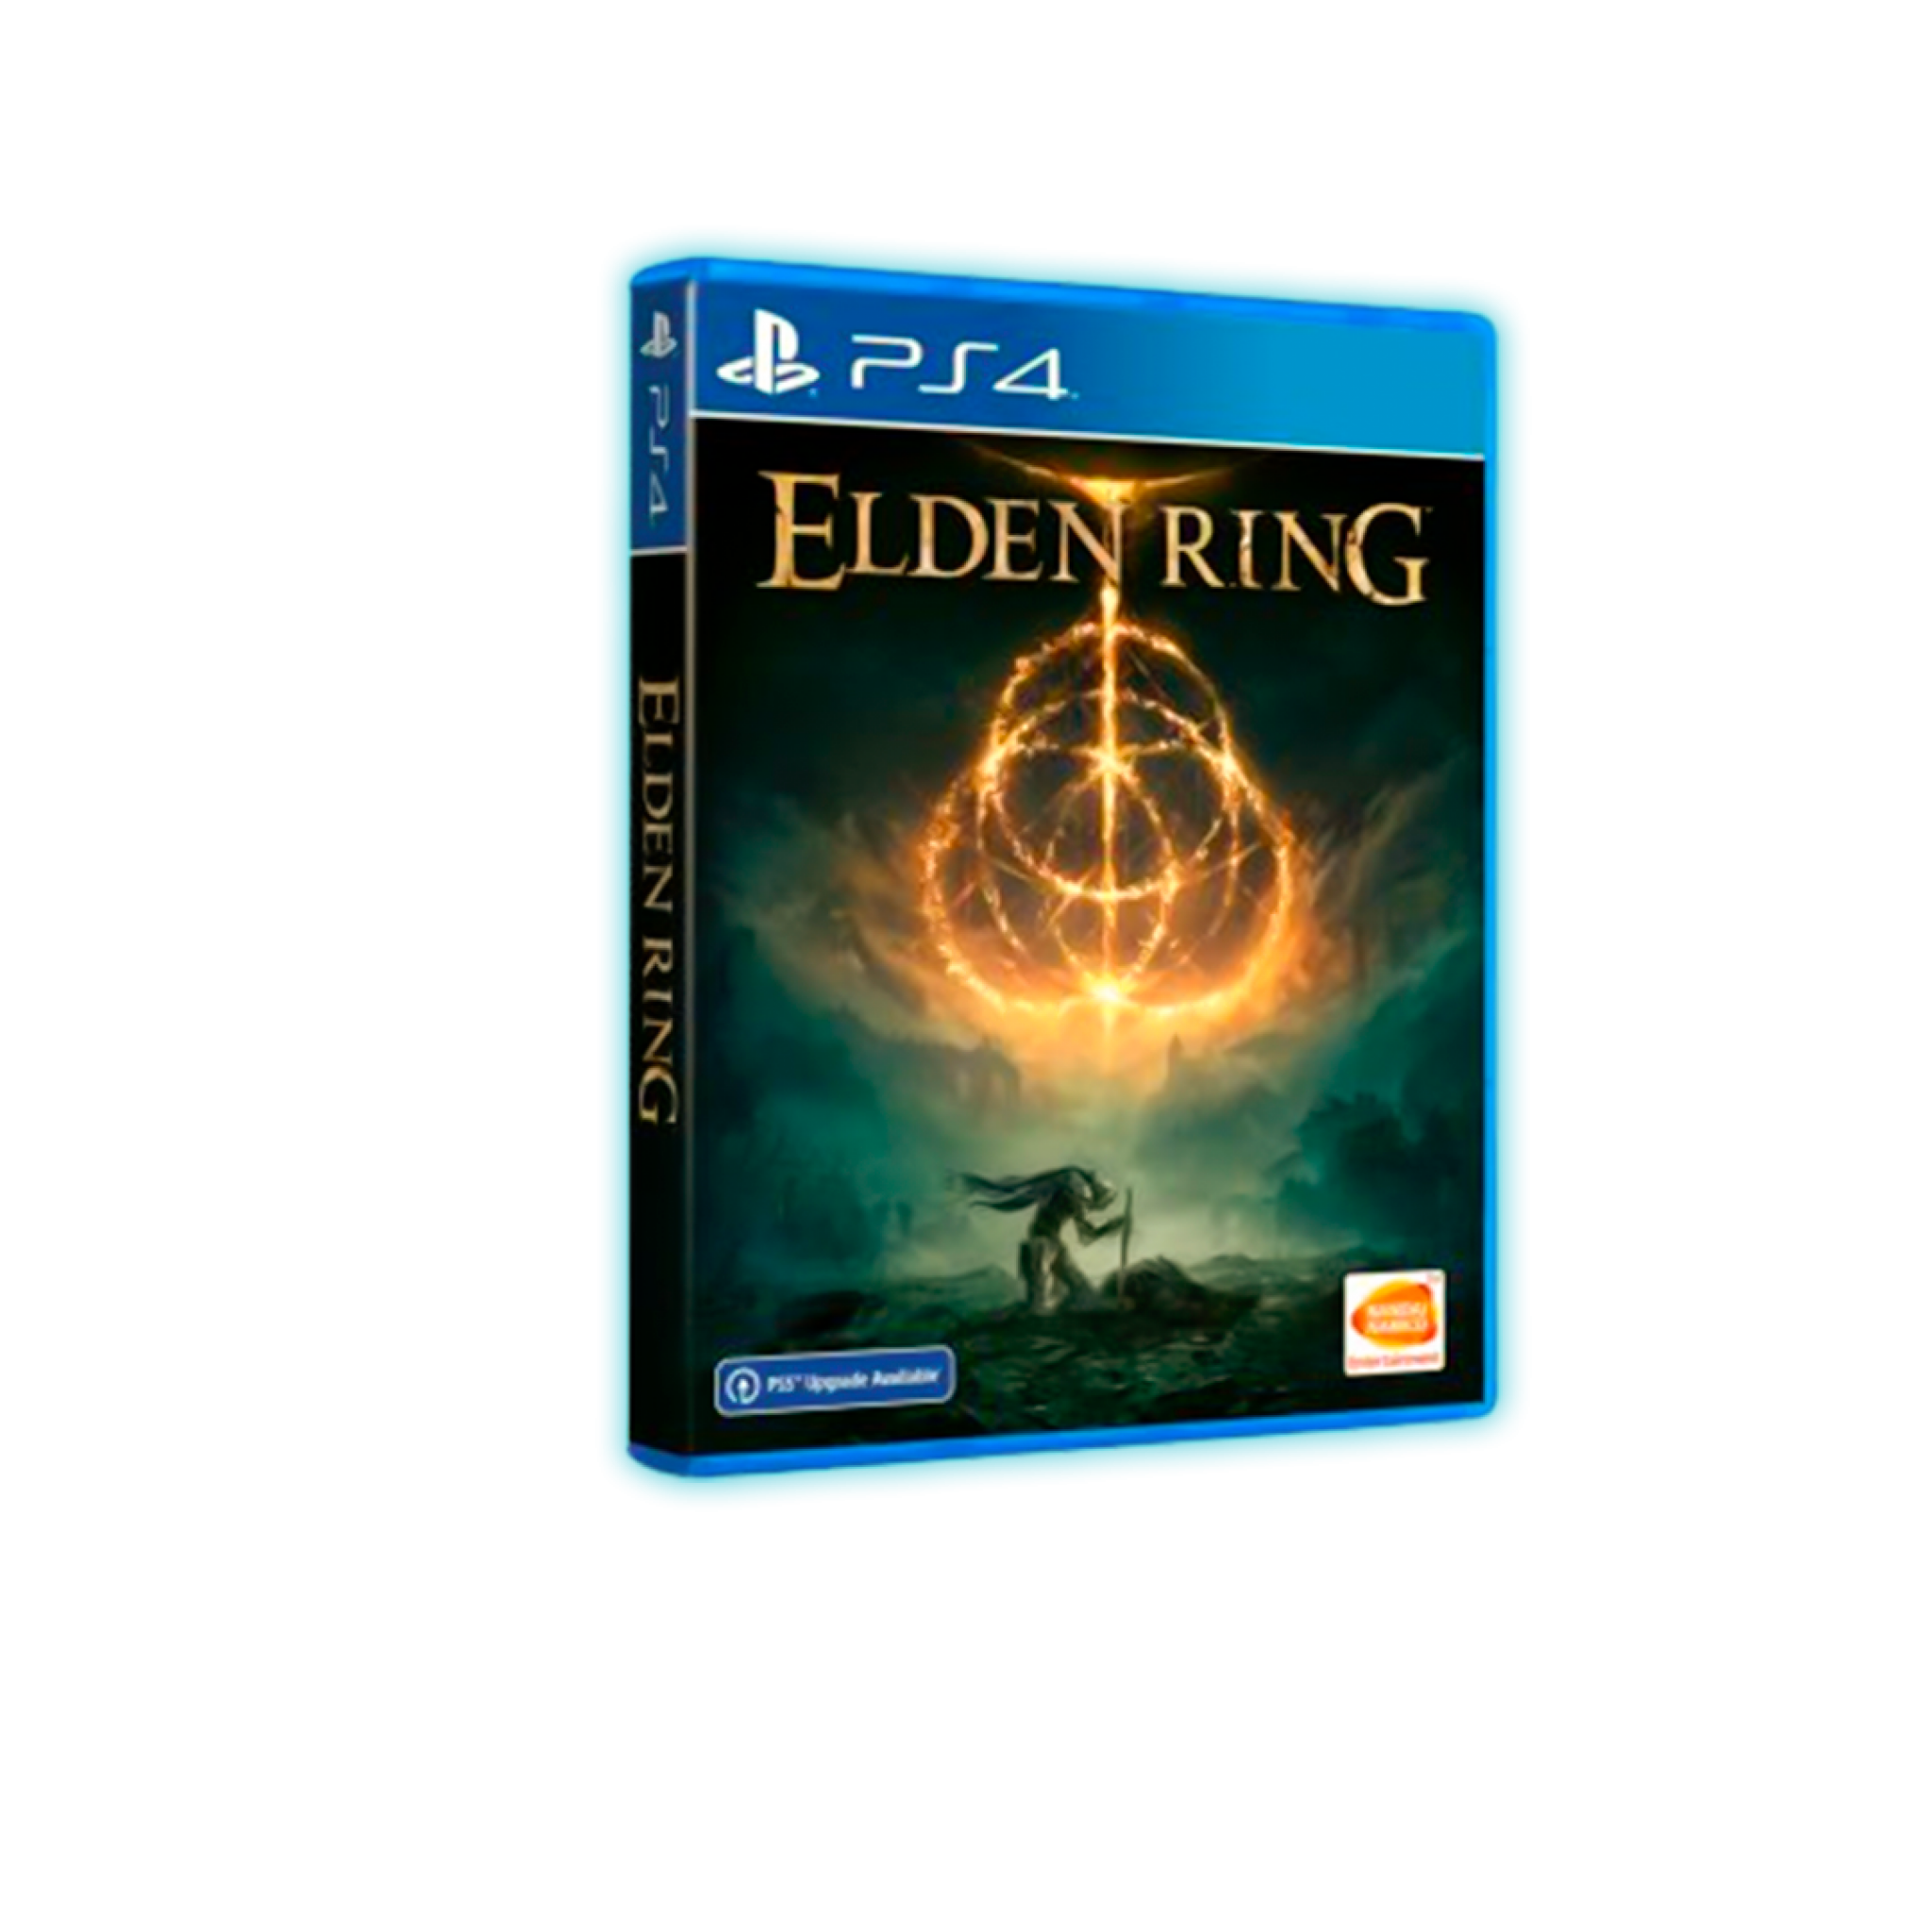 Elden Ring - PS4/PS5 - PRÉ VENDA - Turok Games - Só aqui tem